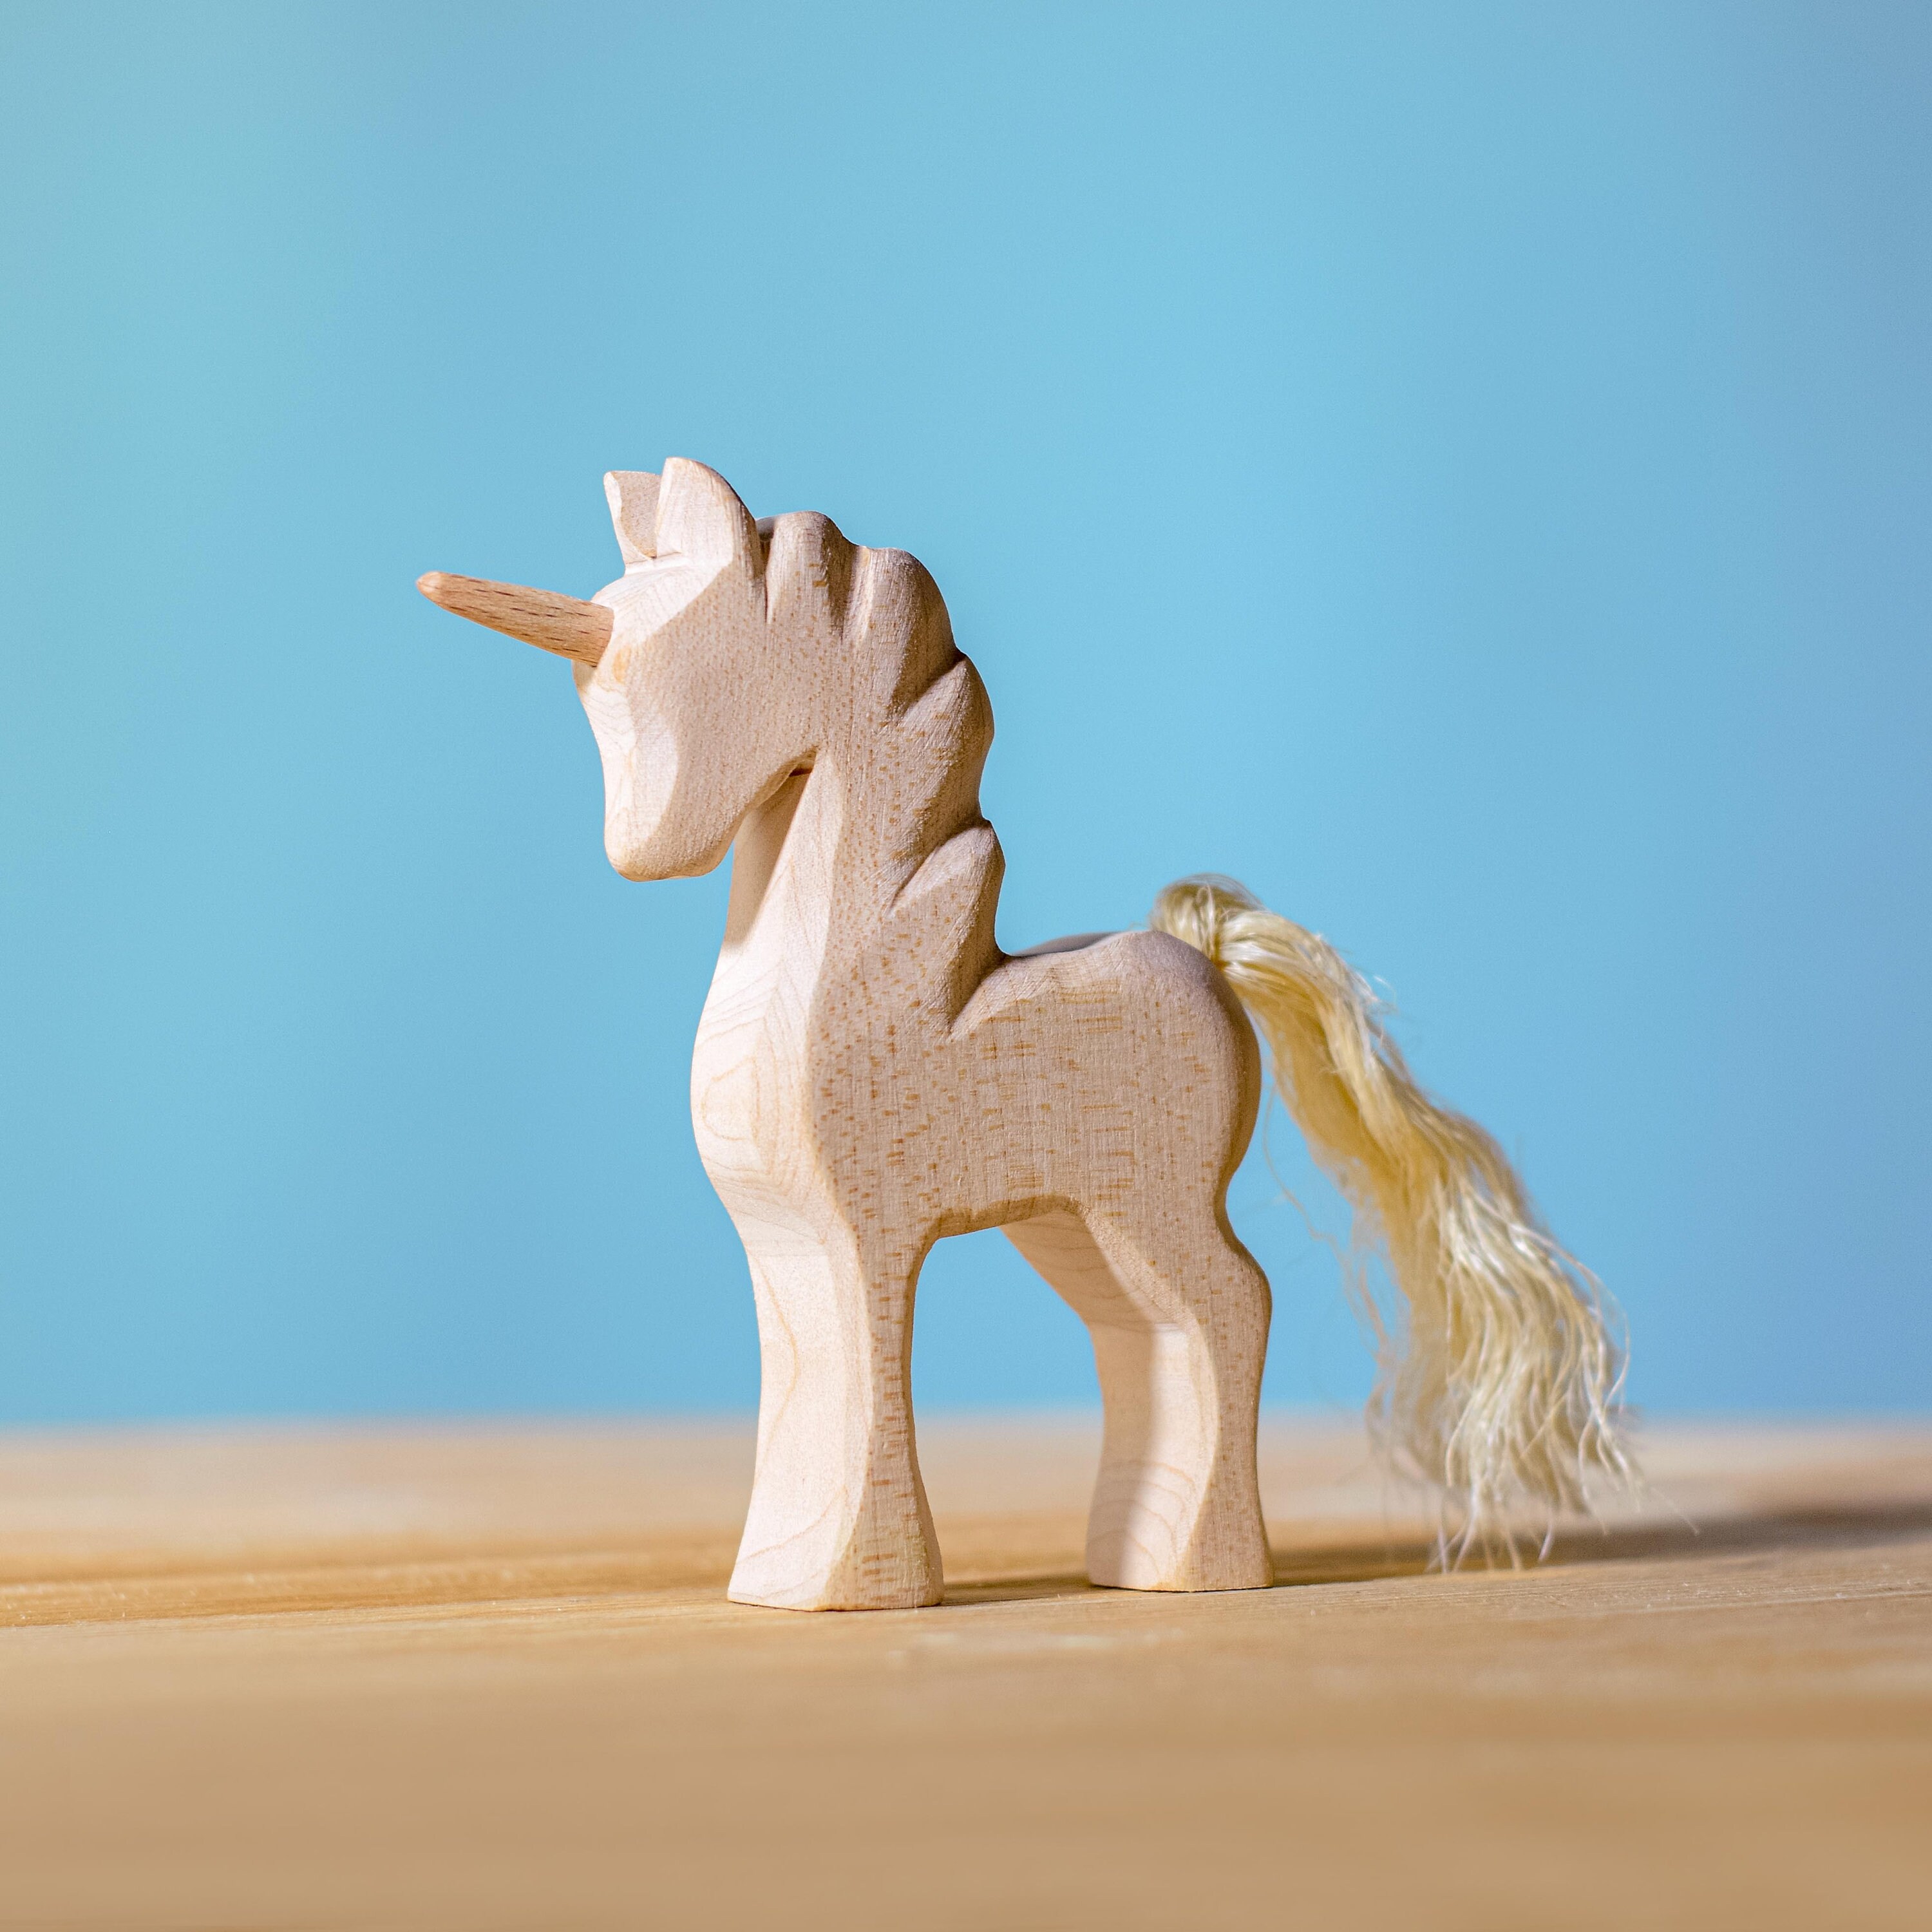 Wooden SKUNK, Handmade Toy Animal, Waldorf Inspired — Jupiter's Child